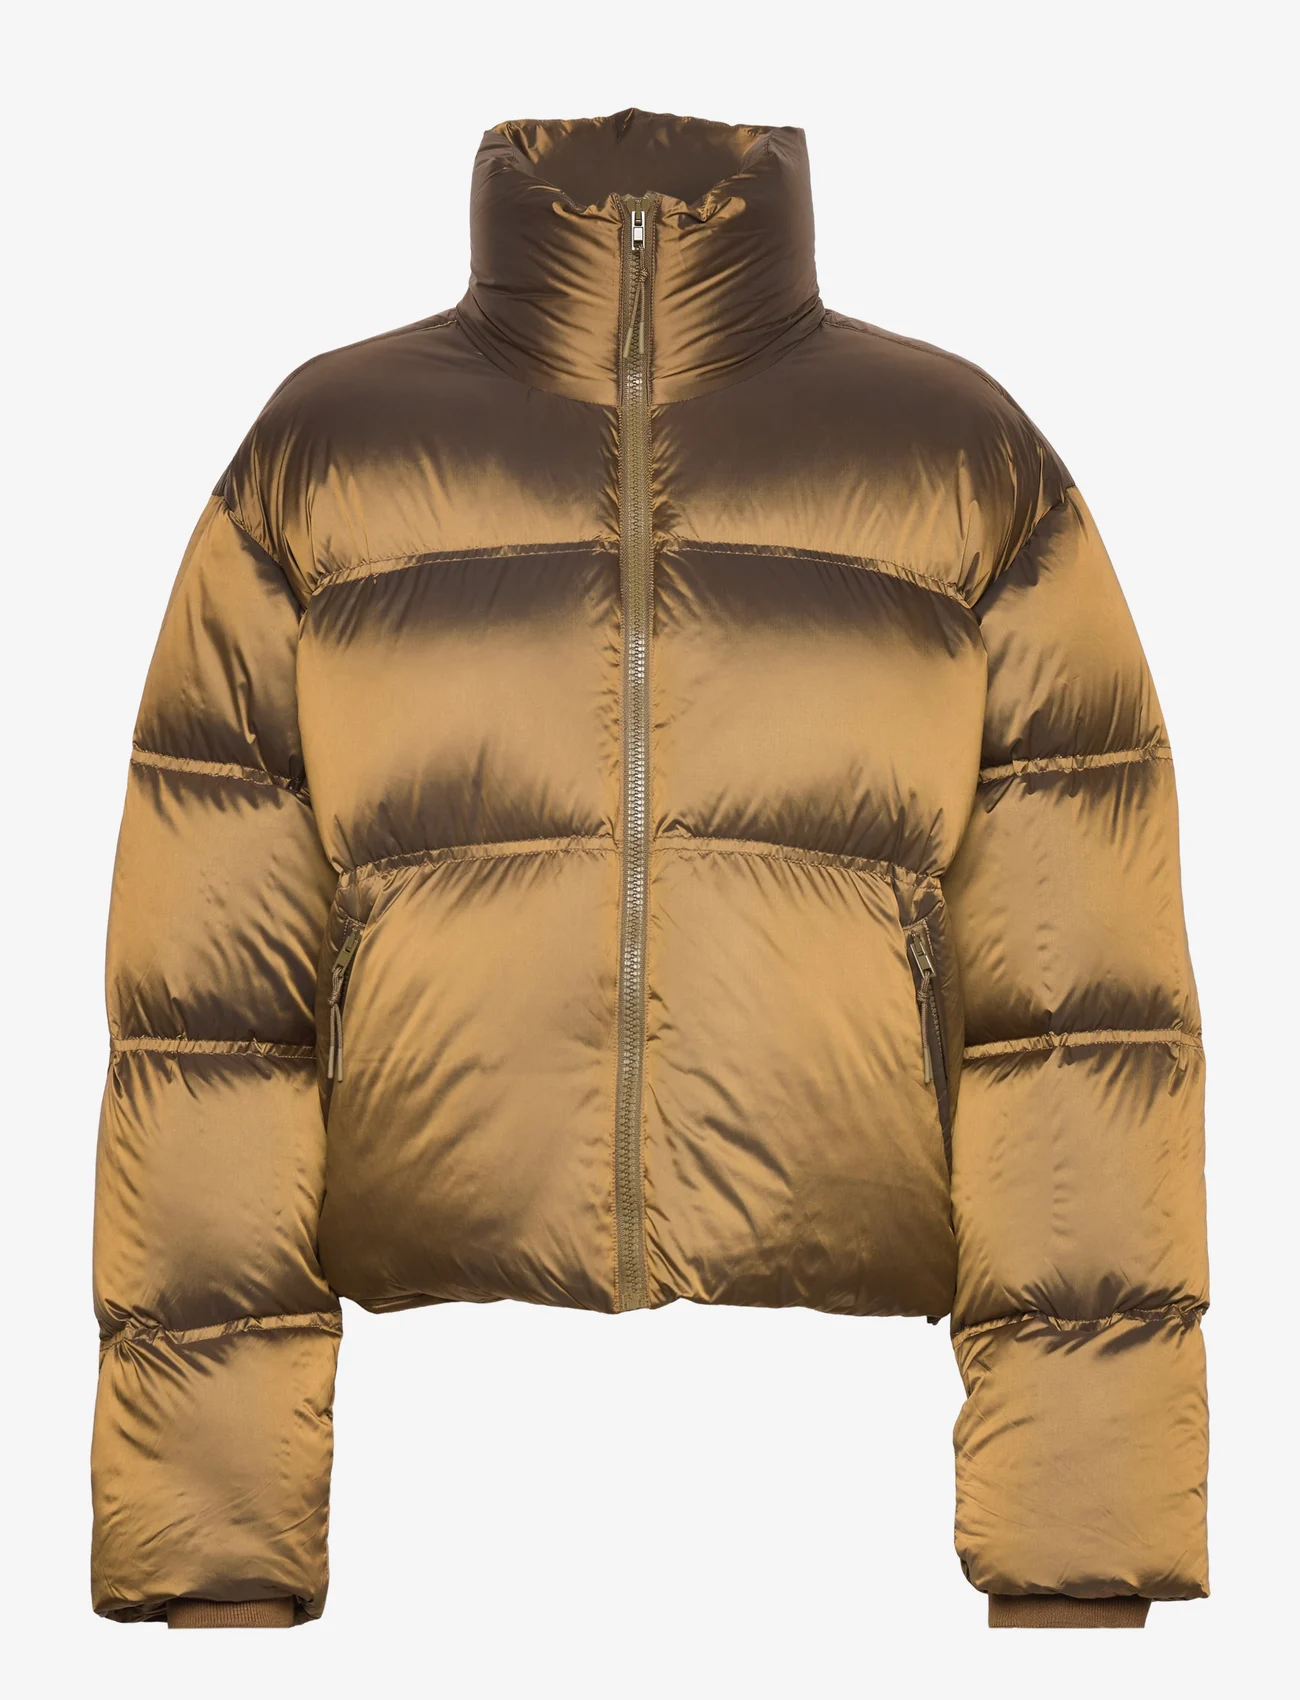 Filippa K - Cropped Puffer Jacket - vinterjackor - bronze gre - 0